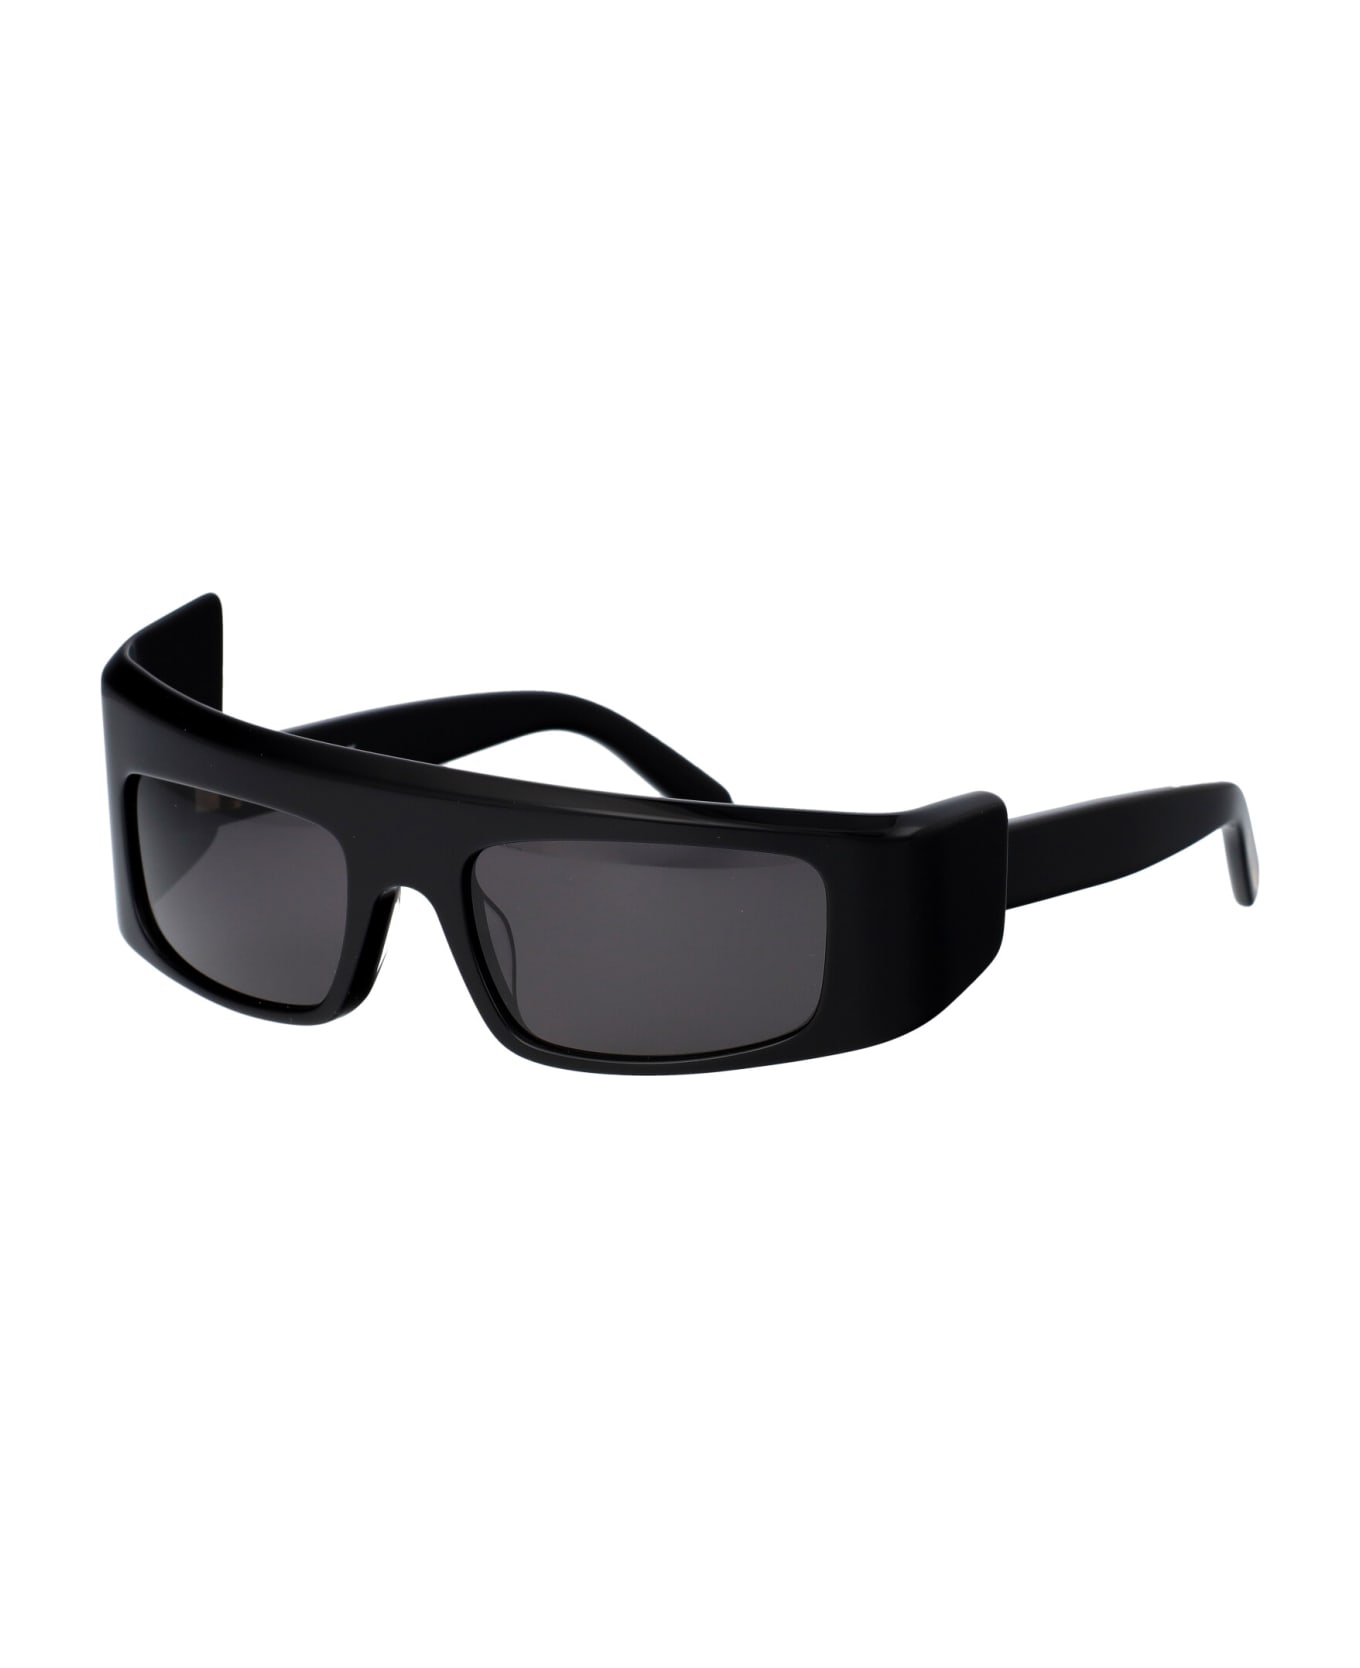 GCDS Gd0043 Sunglasses - 01A Nero Lucido/Fumo サングラス